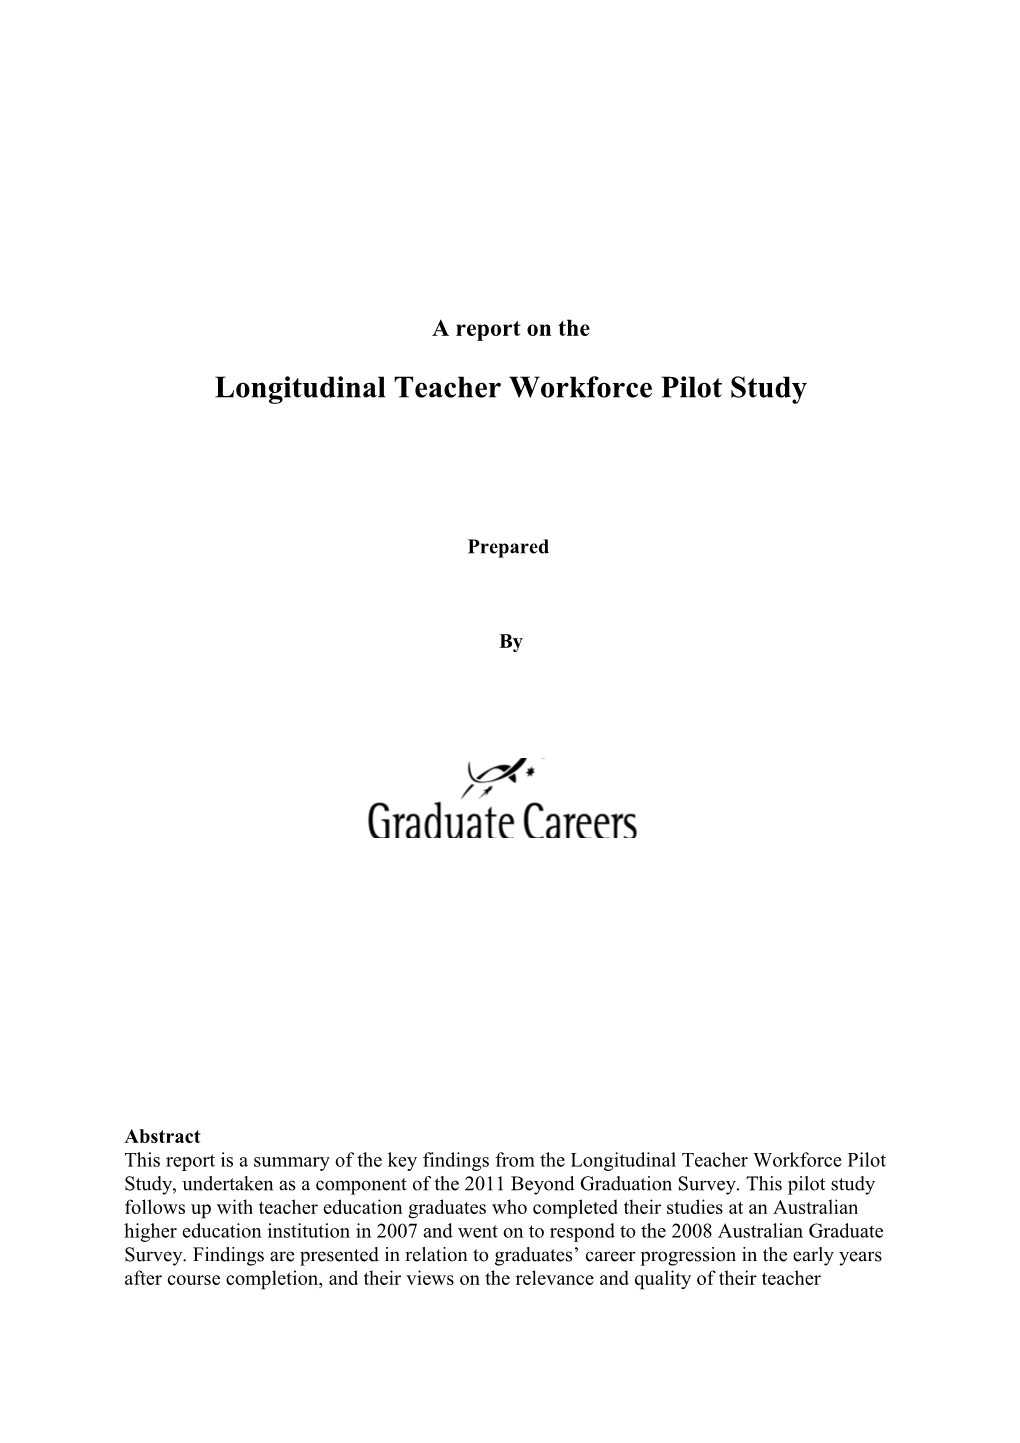 Longitudinal Teacher Workforce Pilot Study